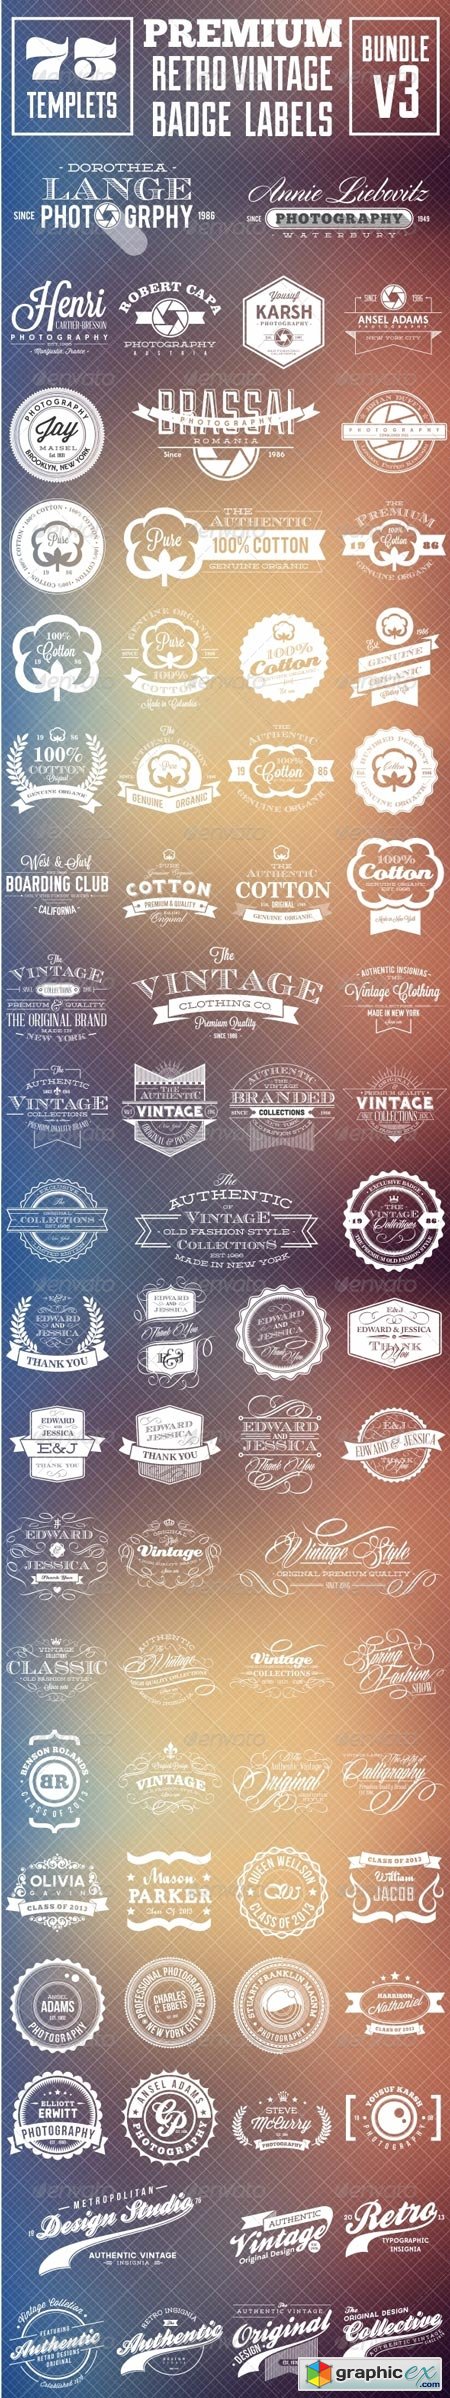 Premium Retro Vintage Badge Labels Bundle v3 8274395